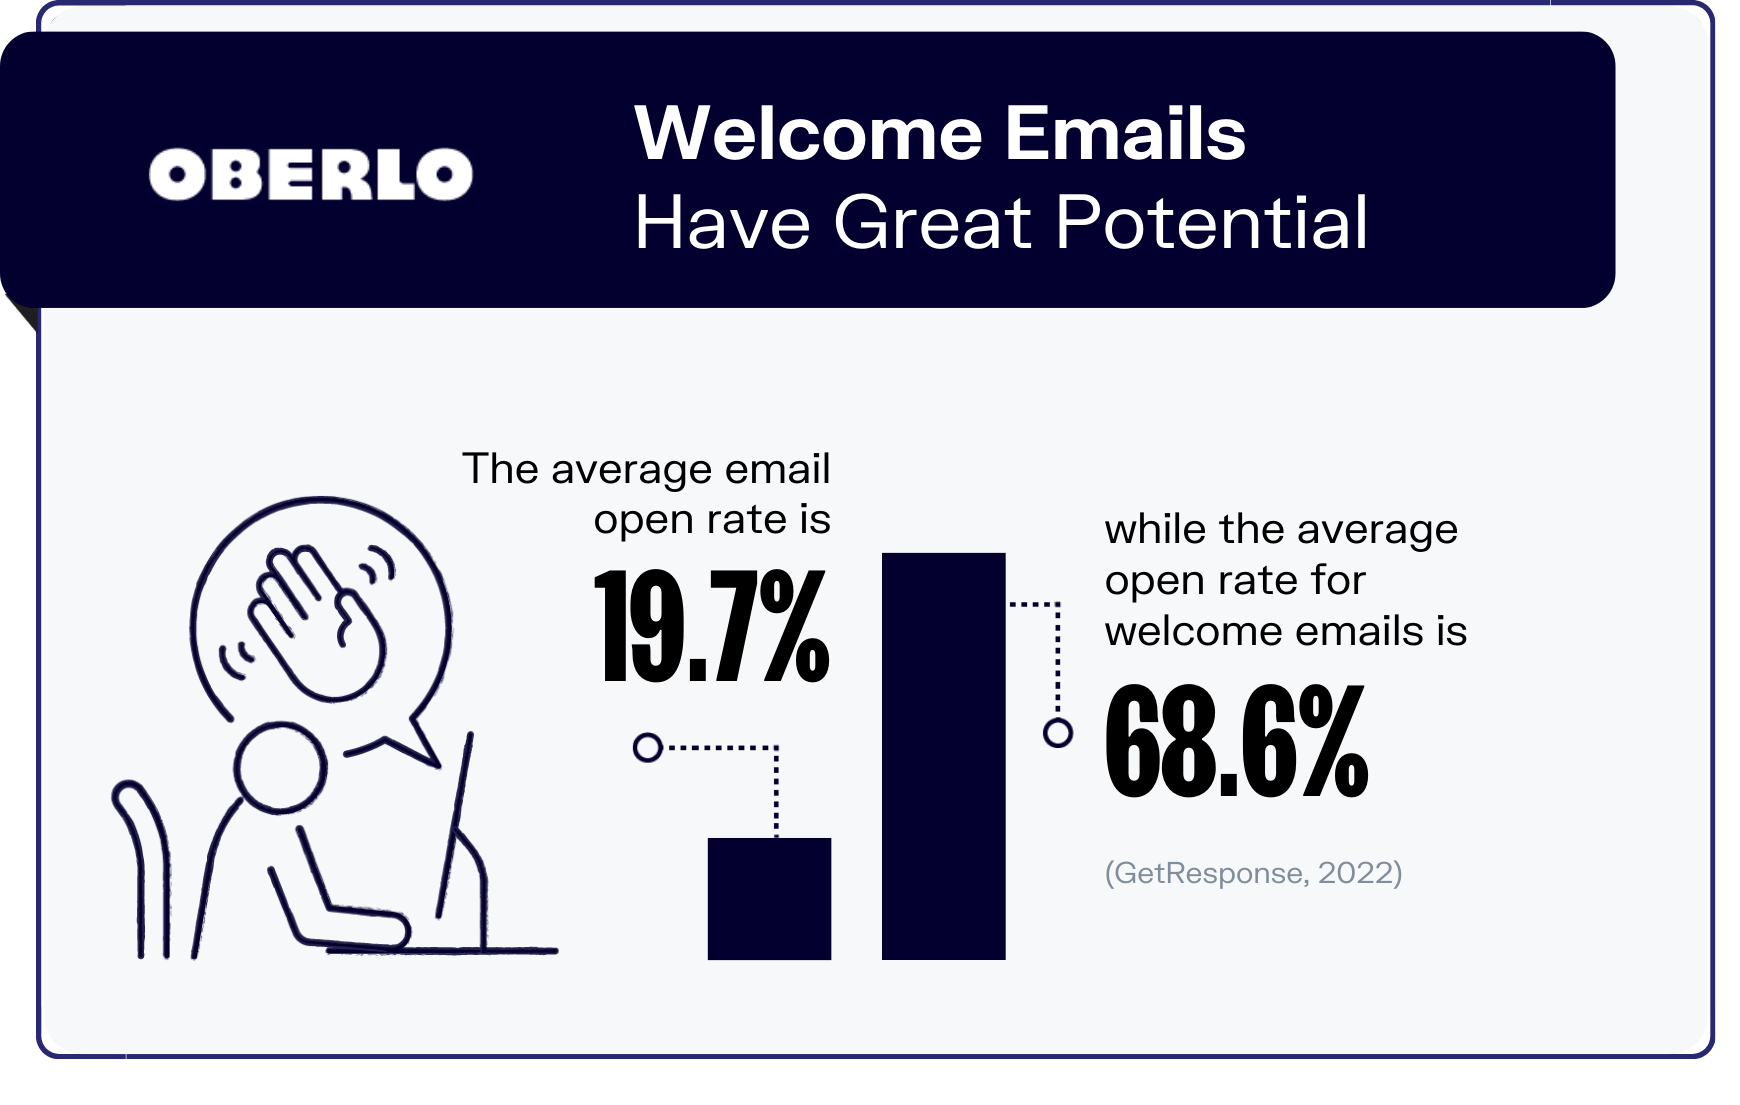 email marketing statistics graphic6